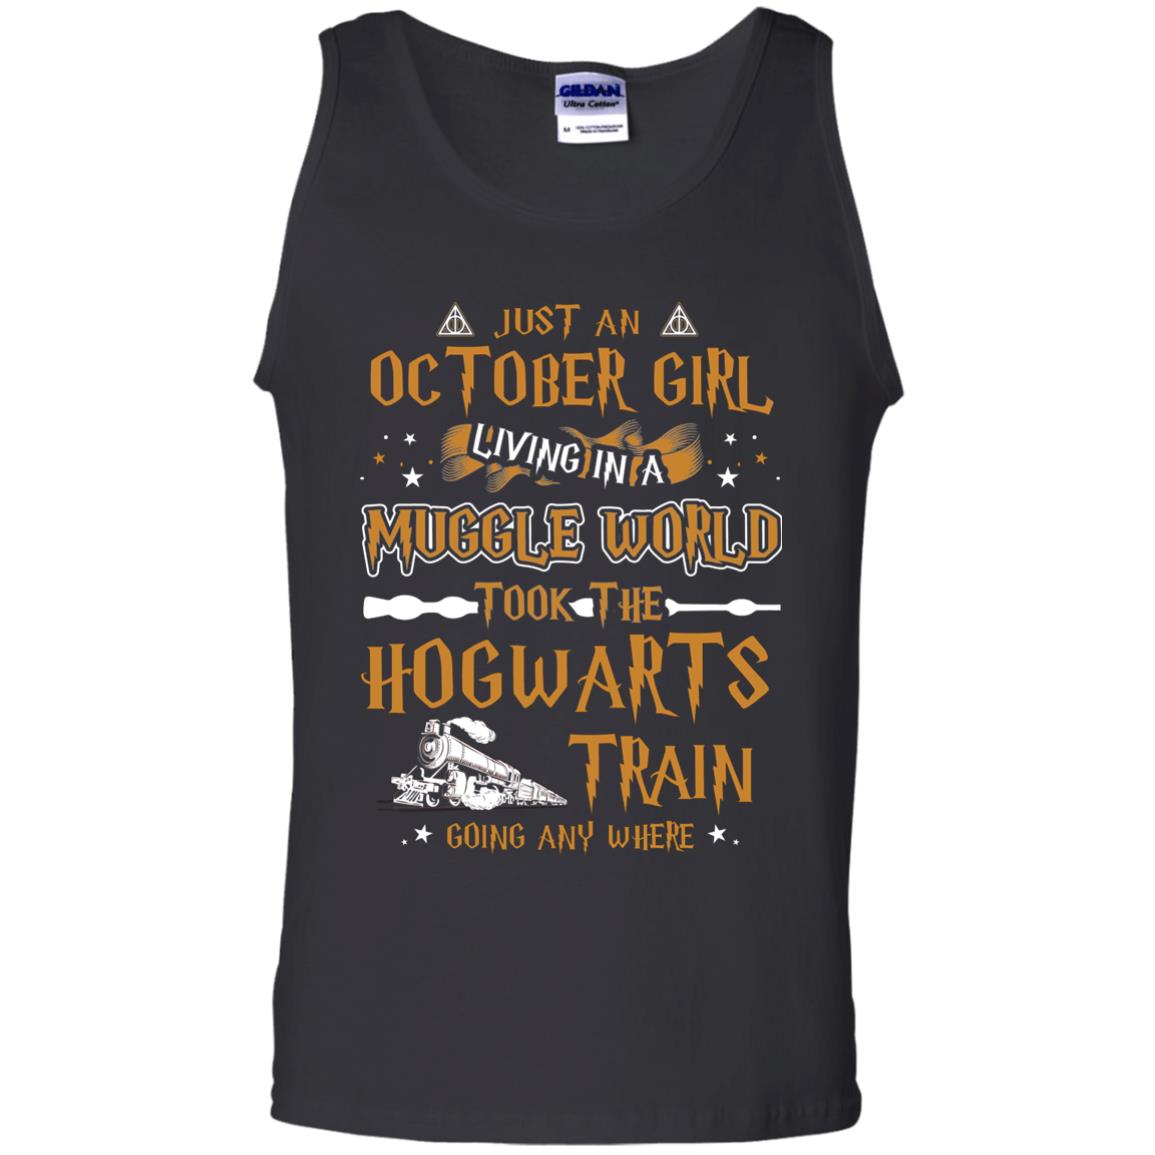 Just An October Girl Living In A Muggle World Took The Hogwarts Train Going Any Where ShirtG220 Gildan 100% Cotton Tank Top